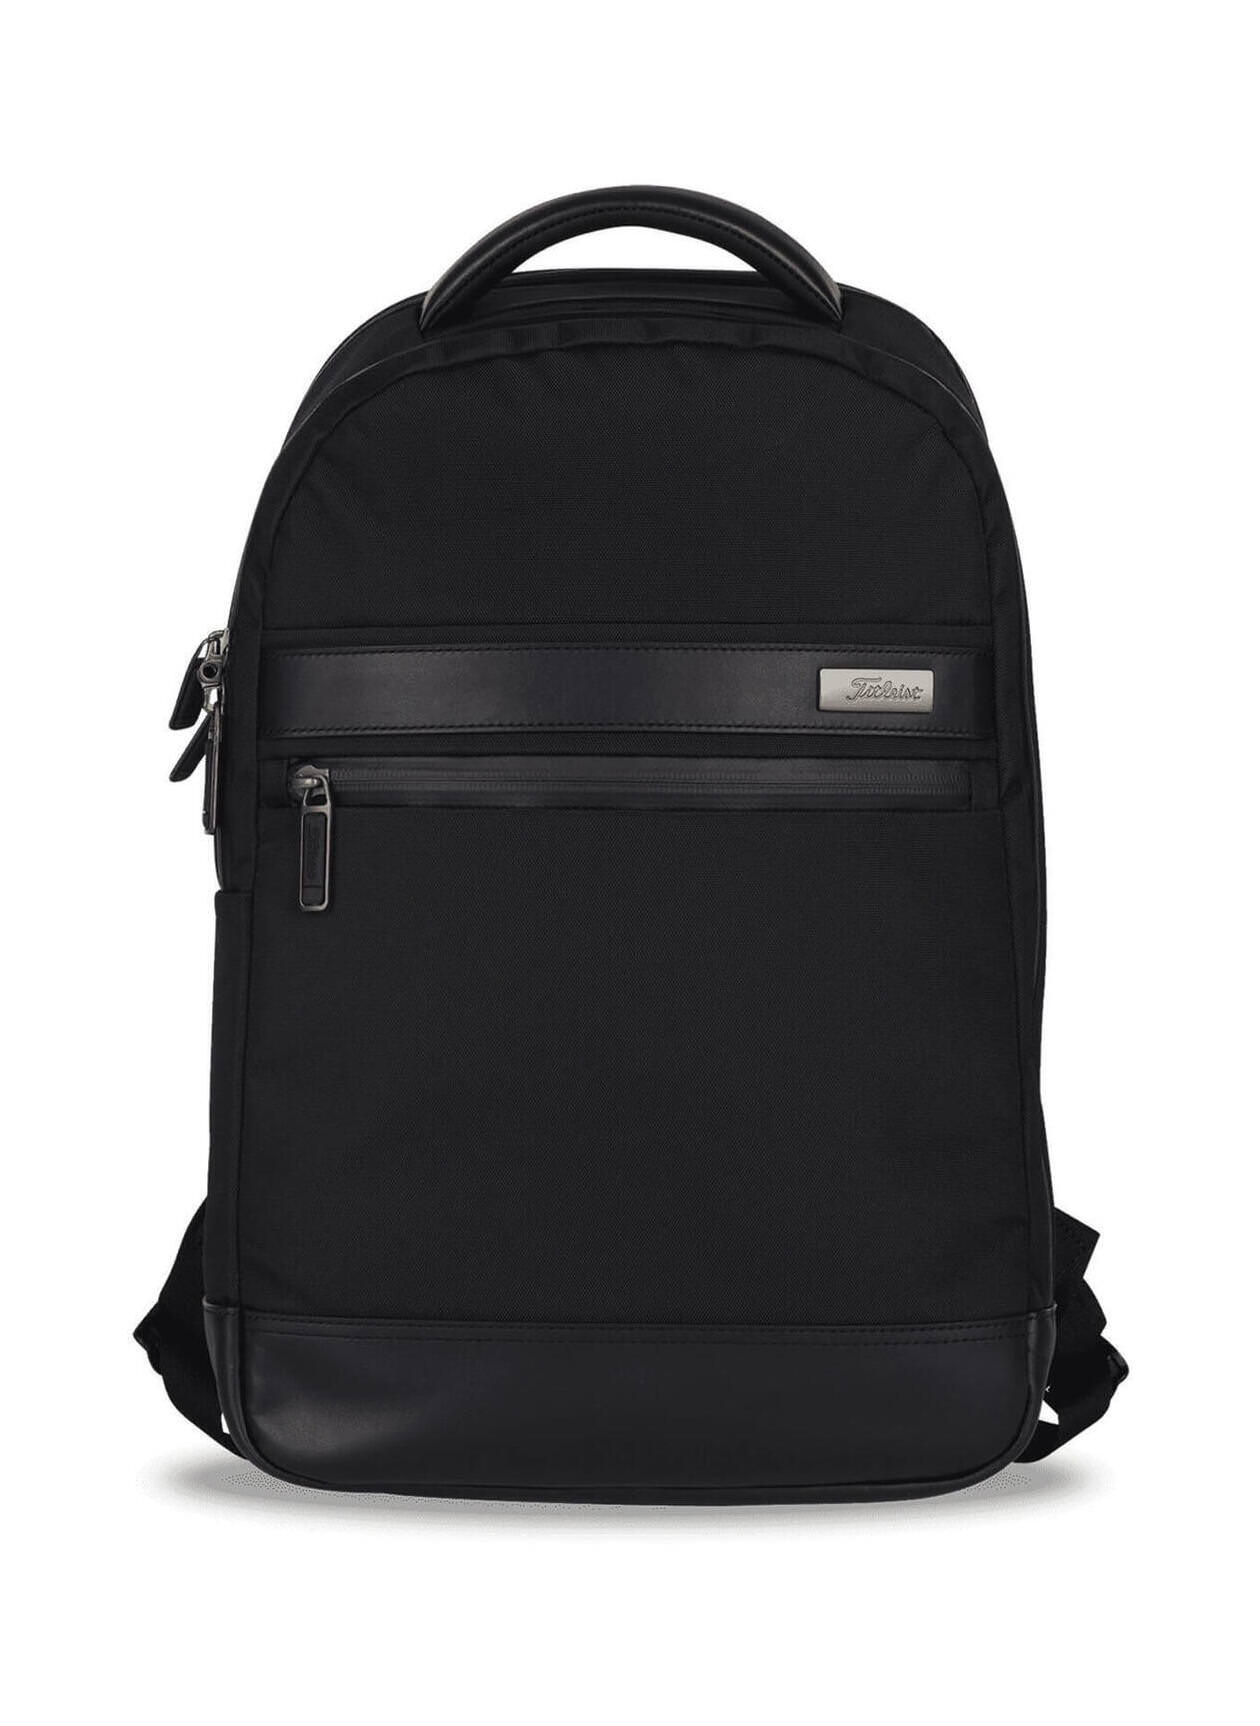 Titleist Professional Backpack Black | Titleist